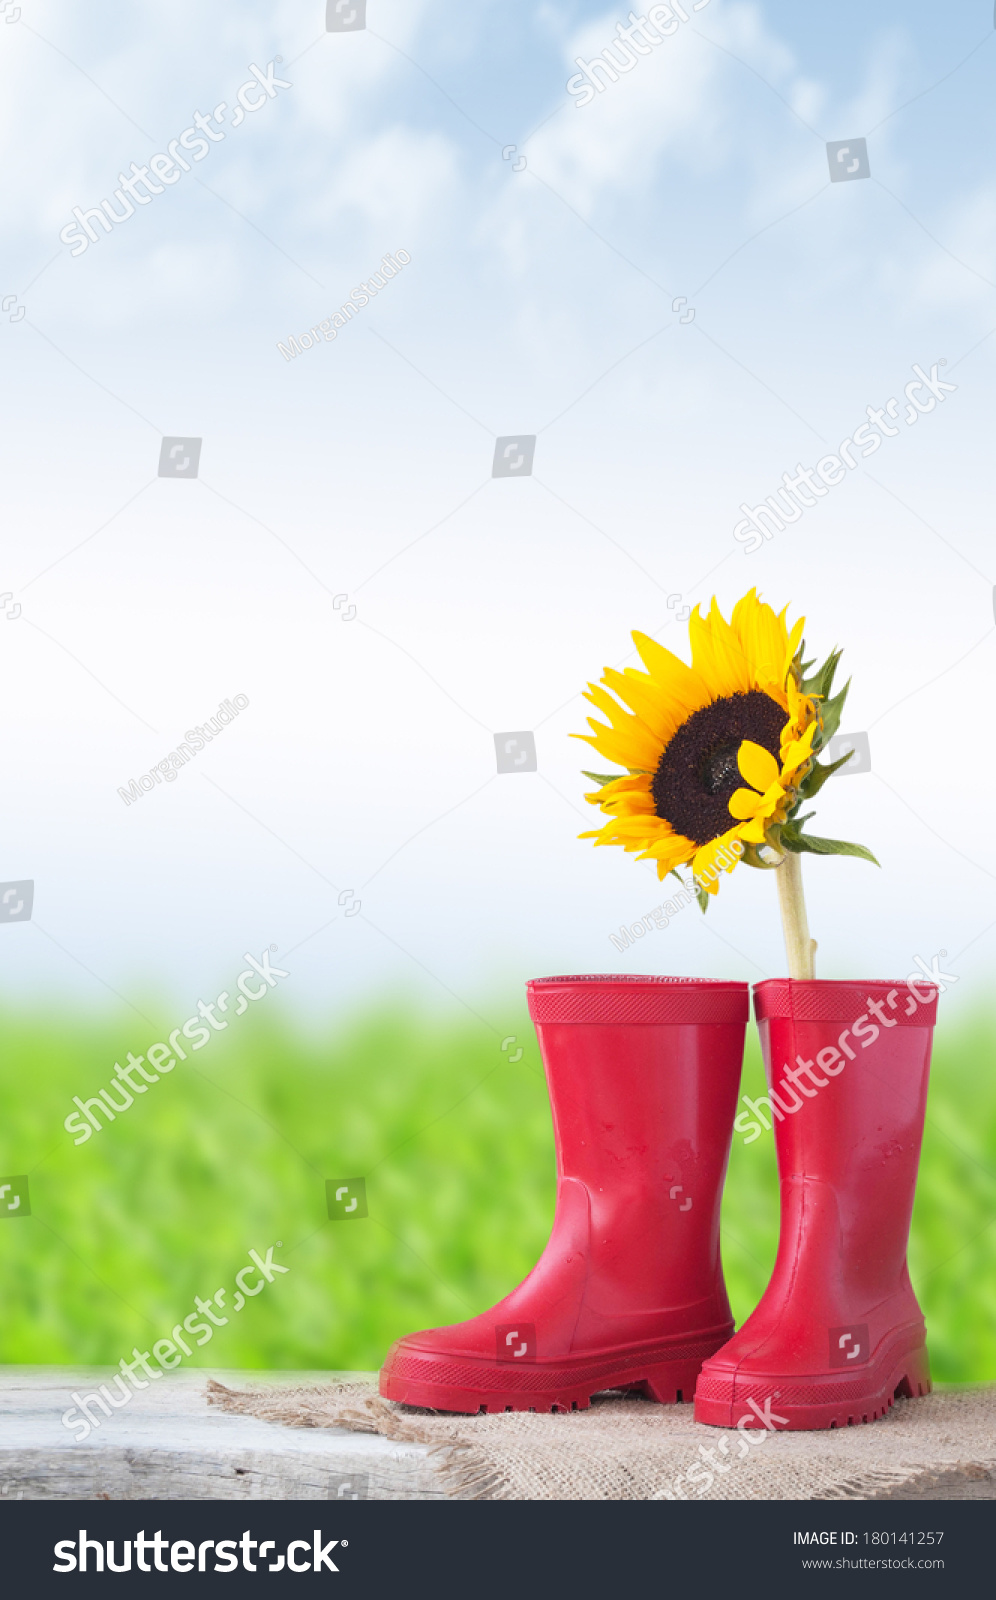 sunflower rainboots